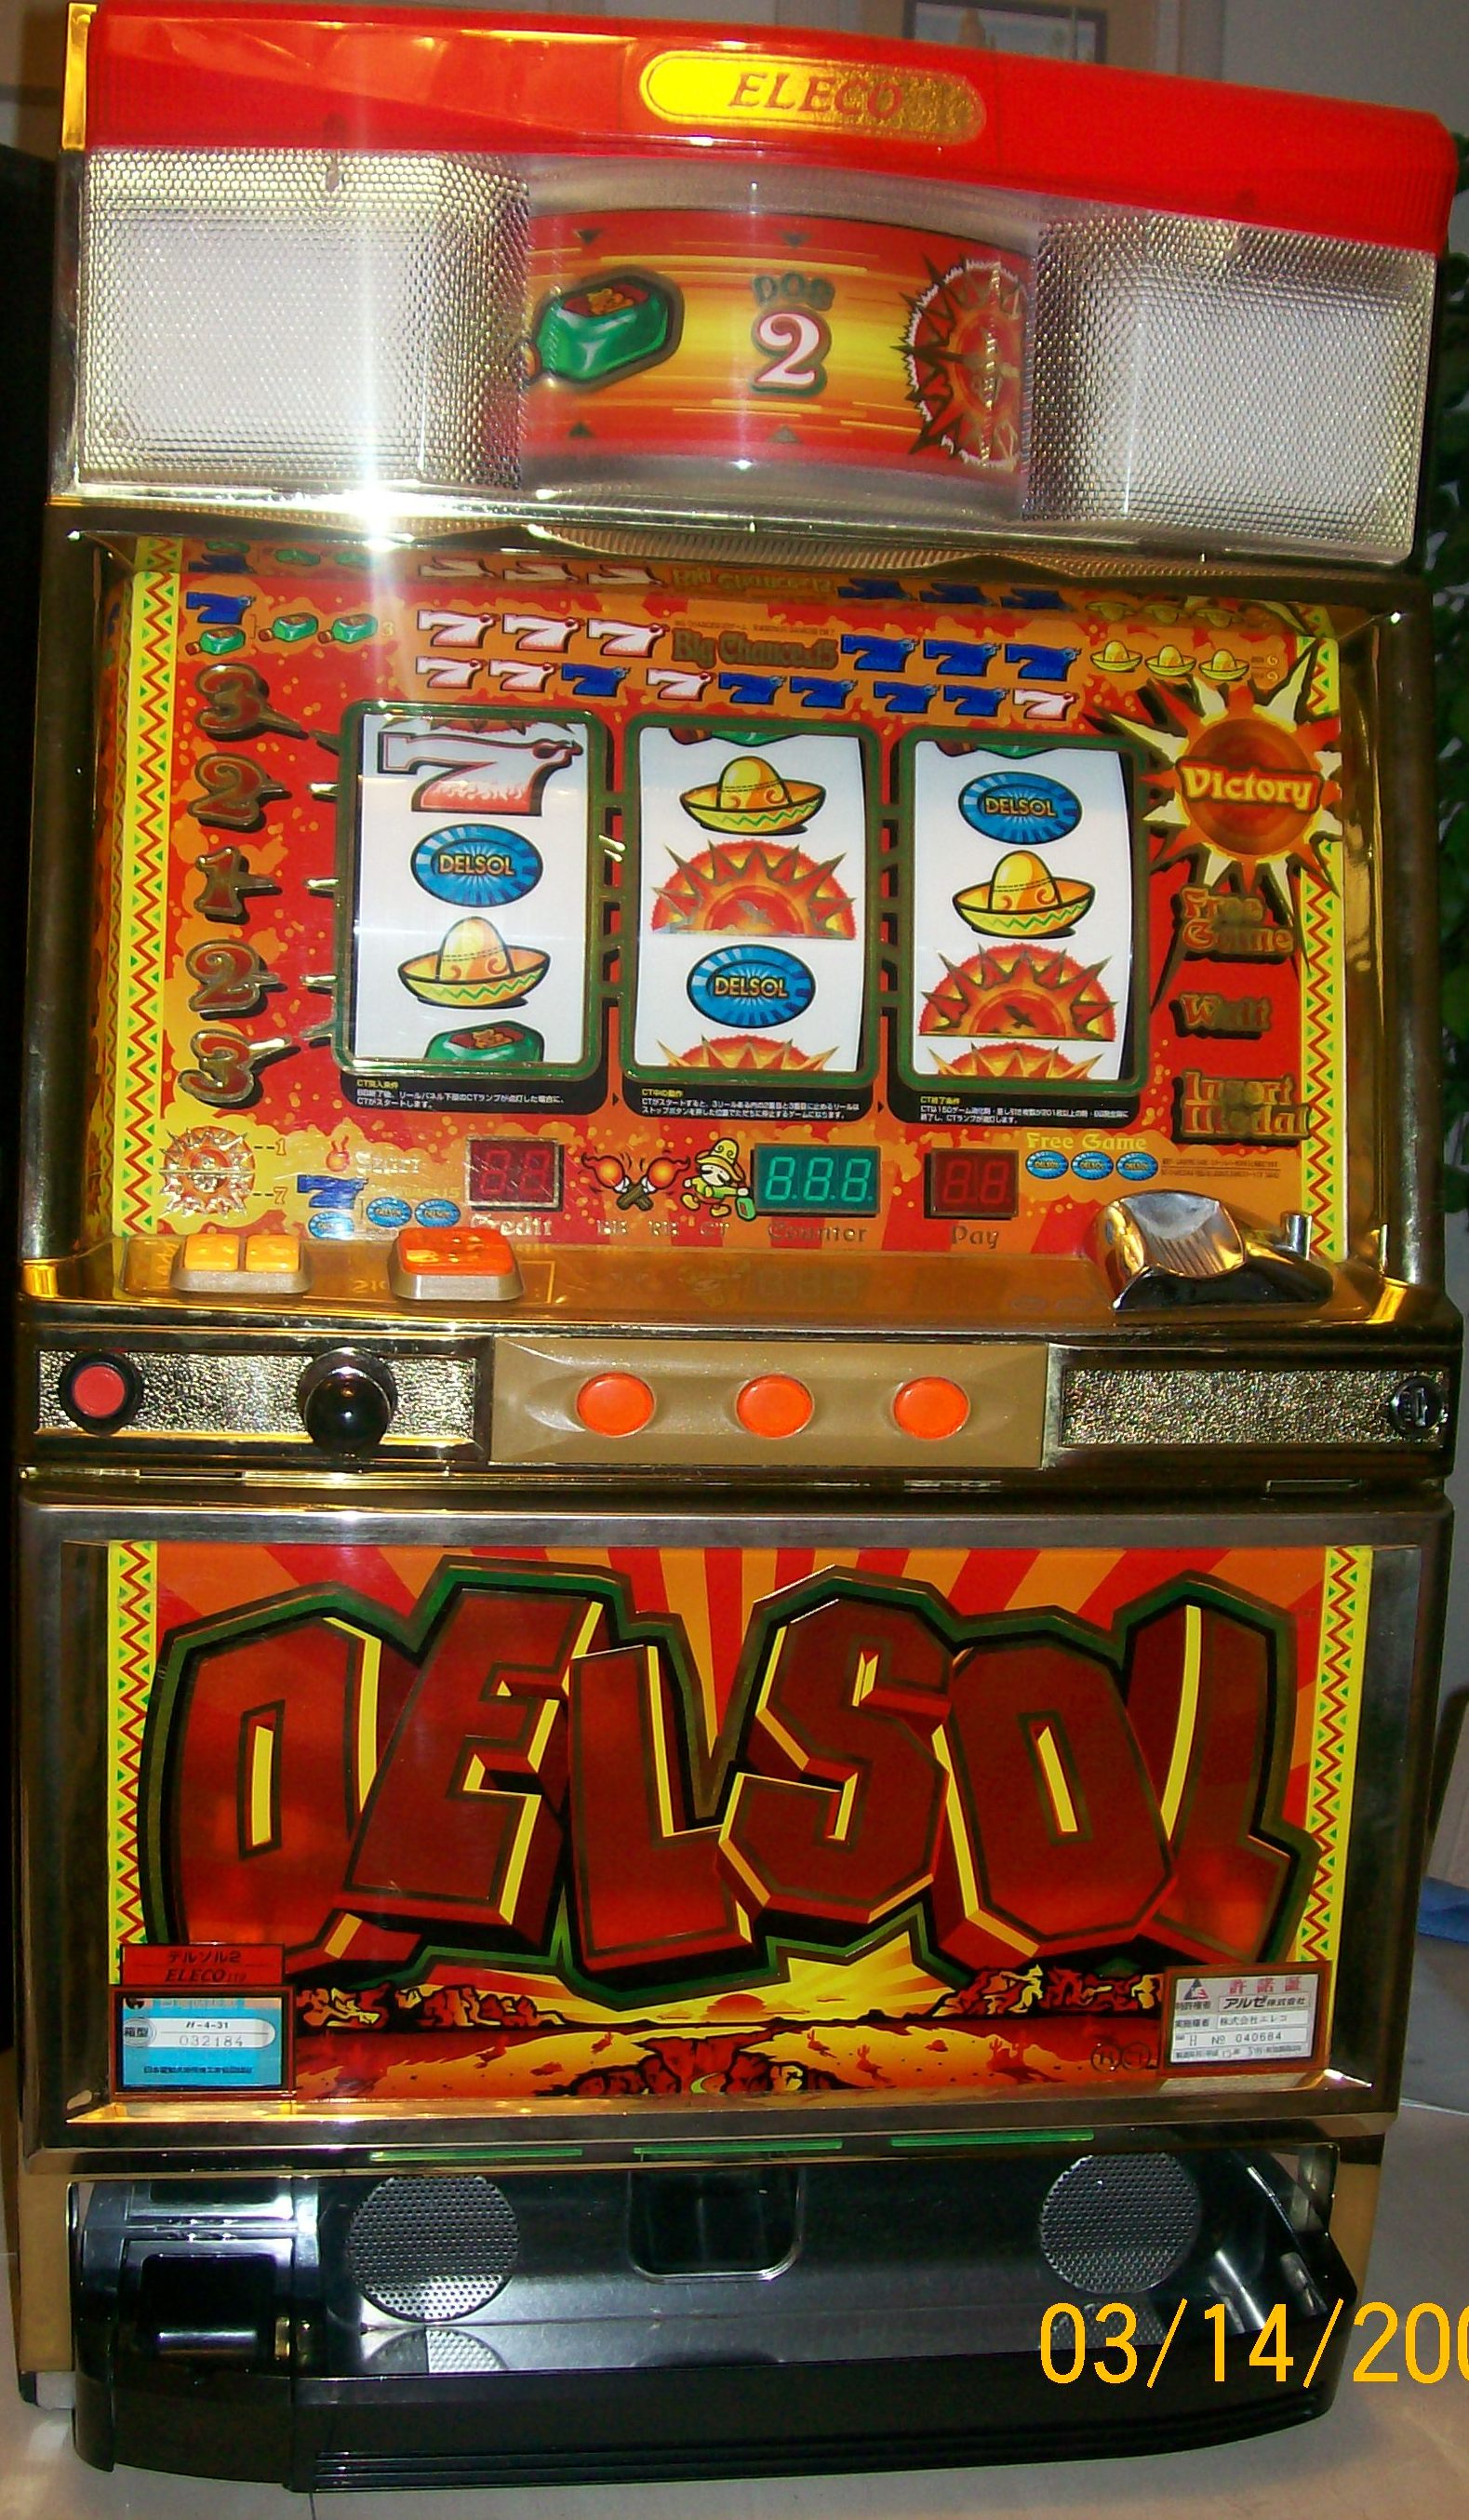 value of del sol slot machine used